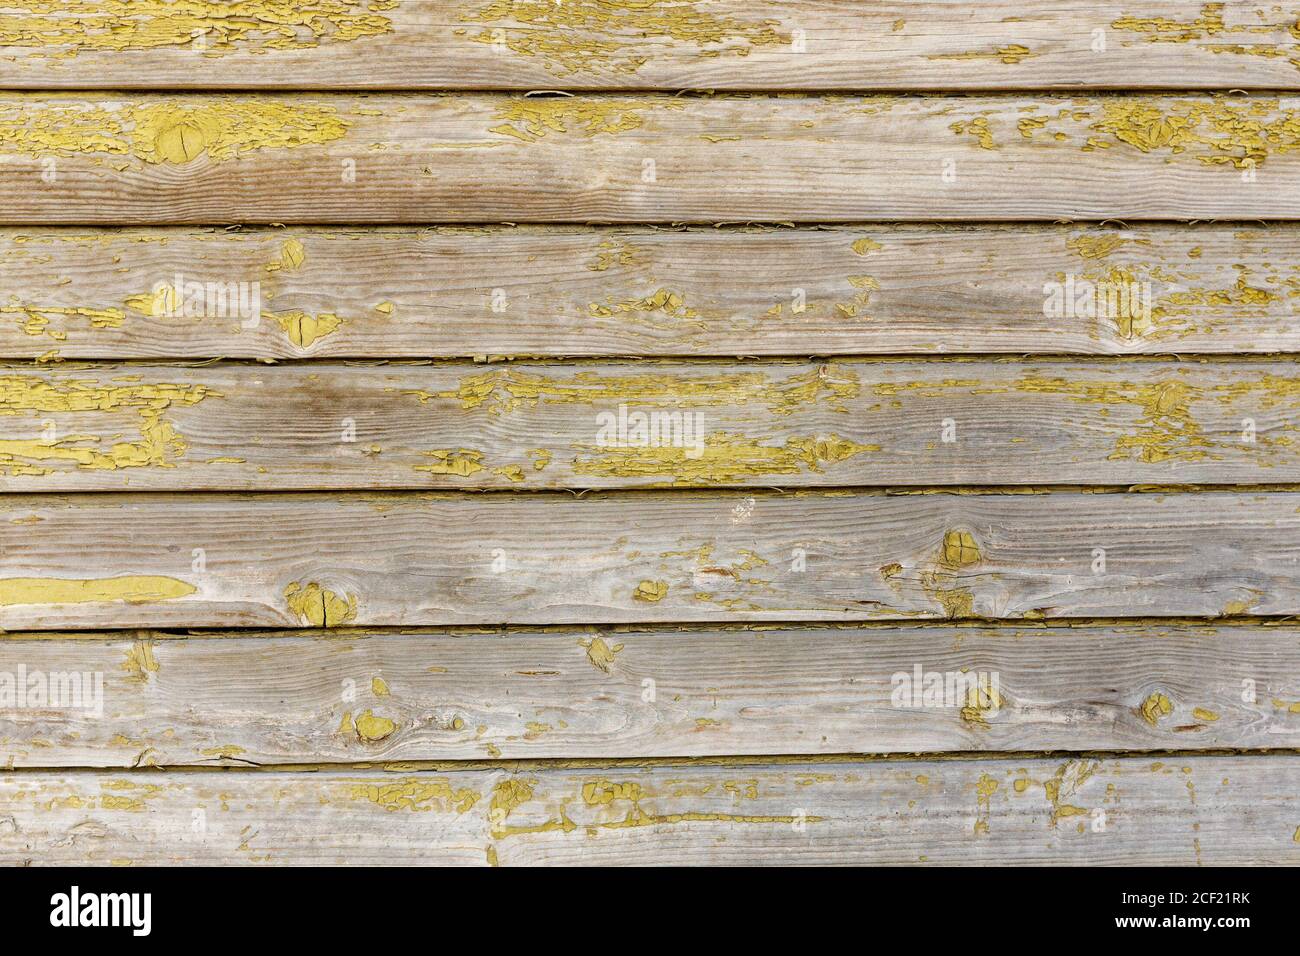 Wood paint colours Stock Photo - Alamy